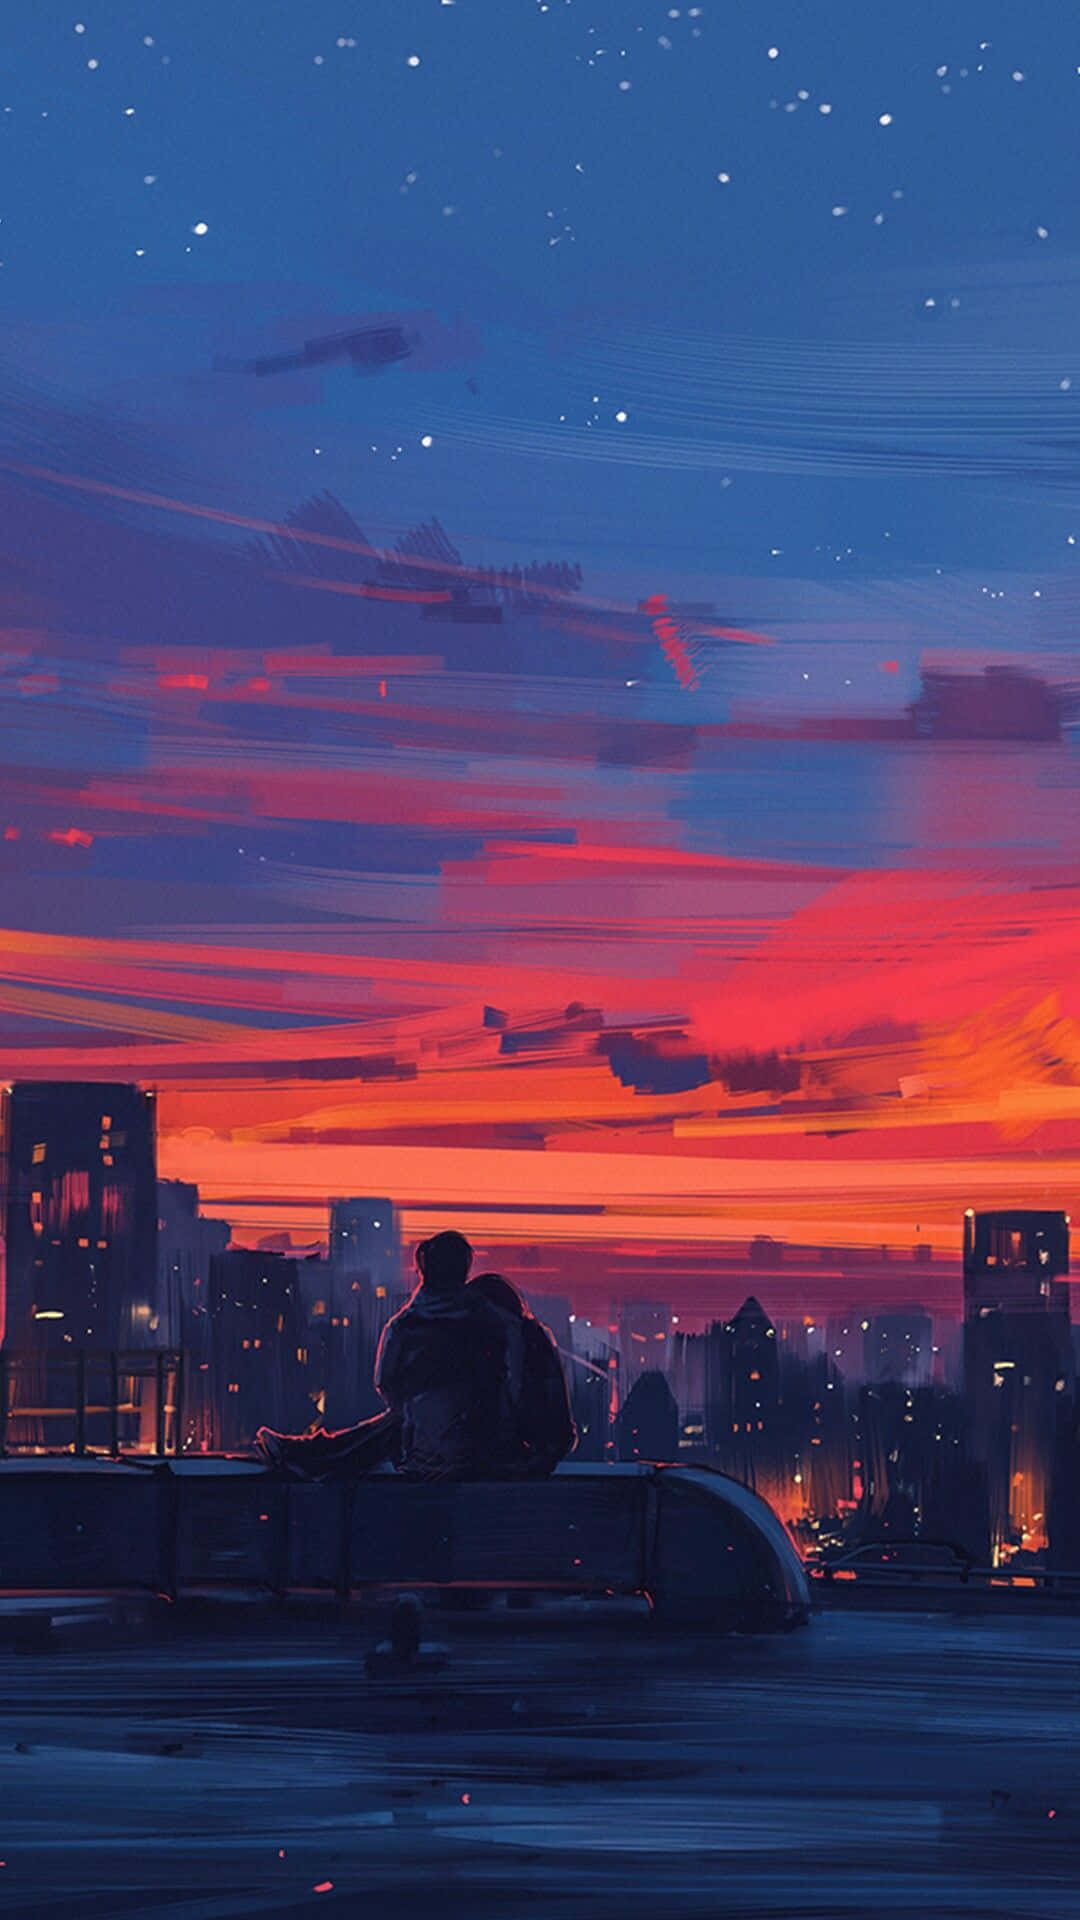 Adorable Anime Couple Enjoying a Sunset Stroll